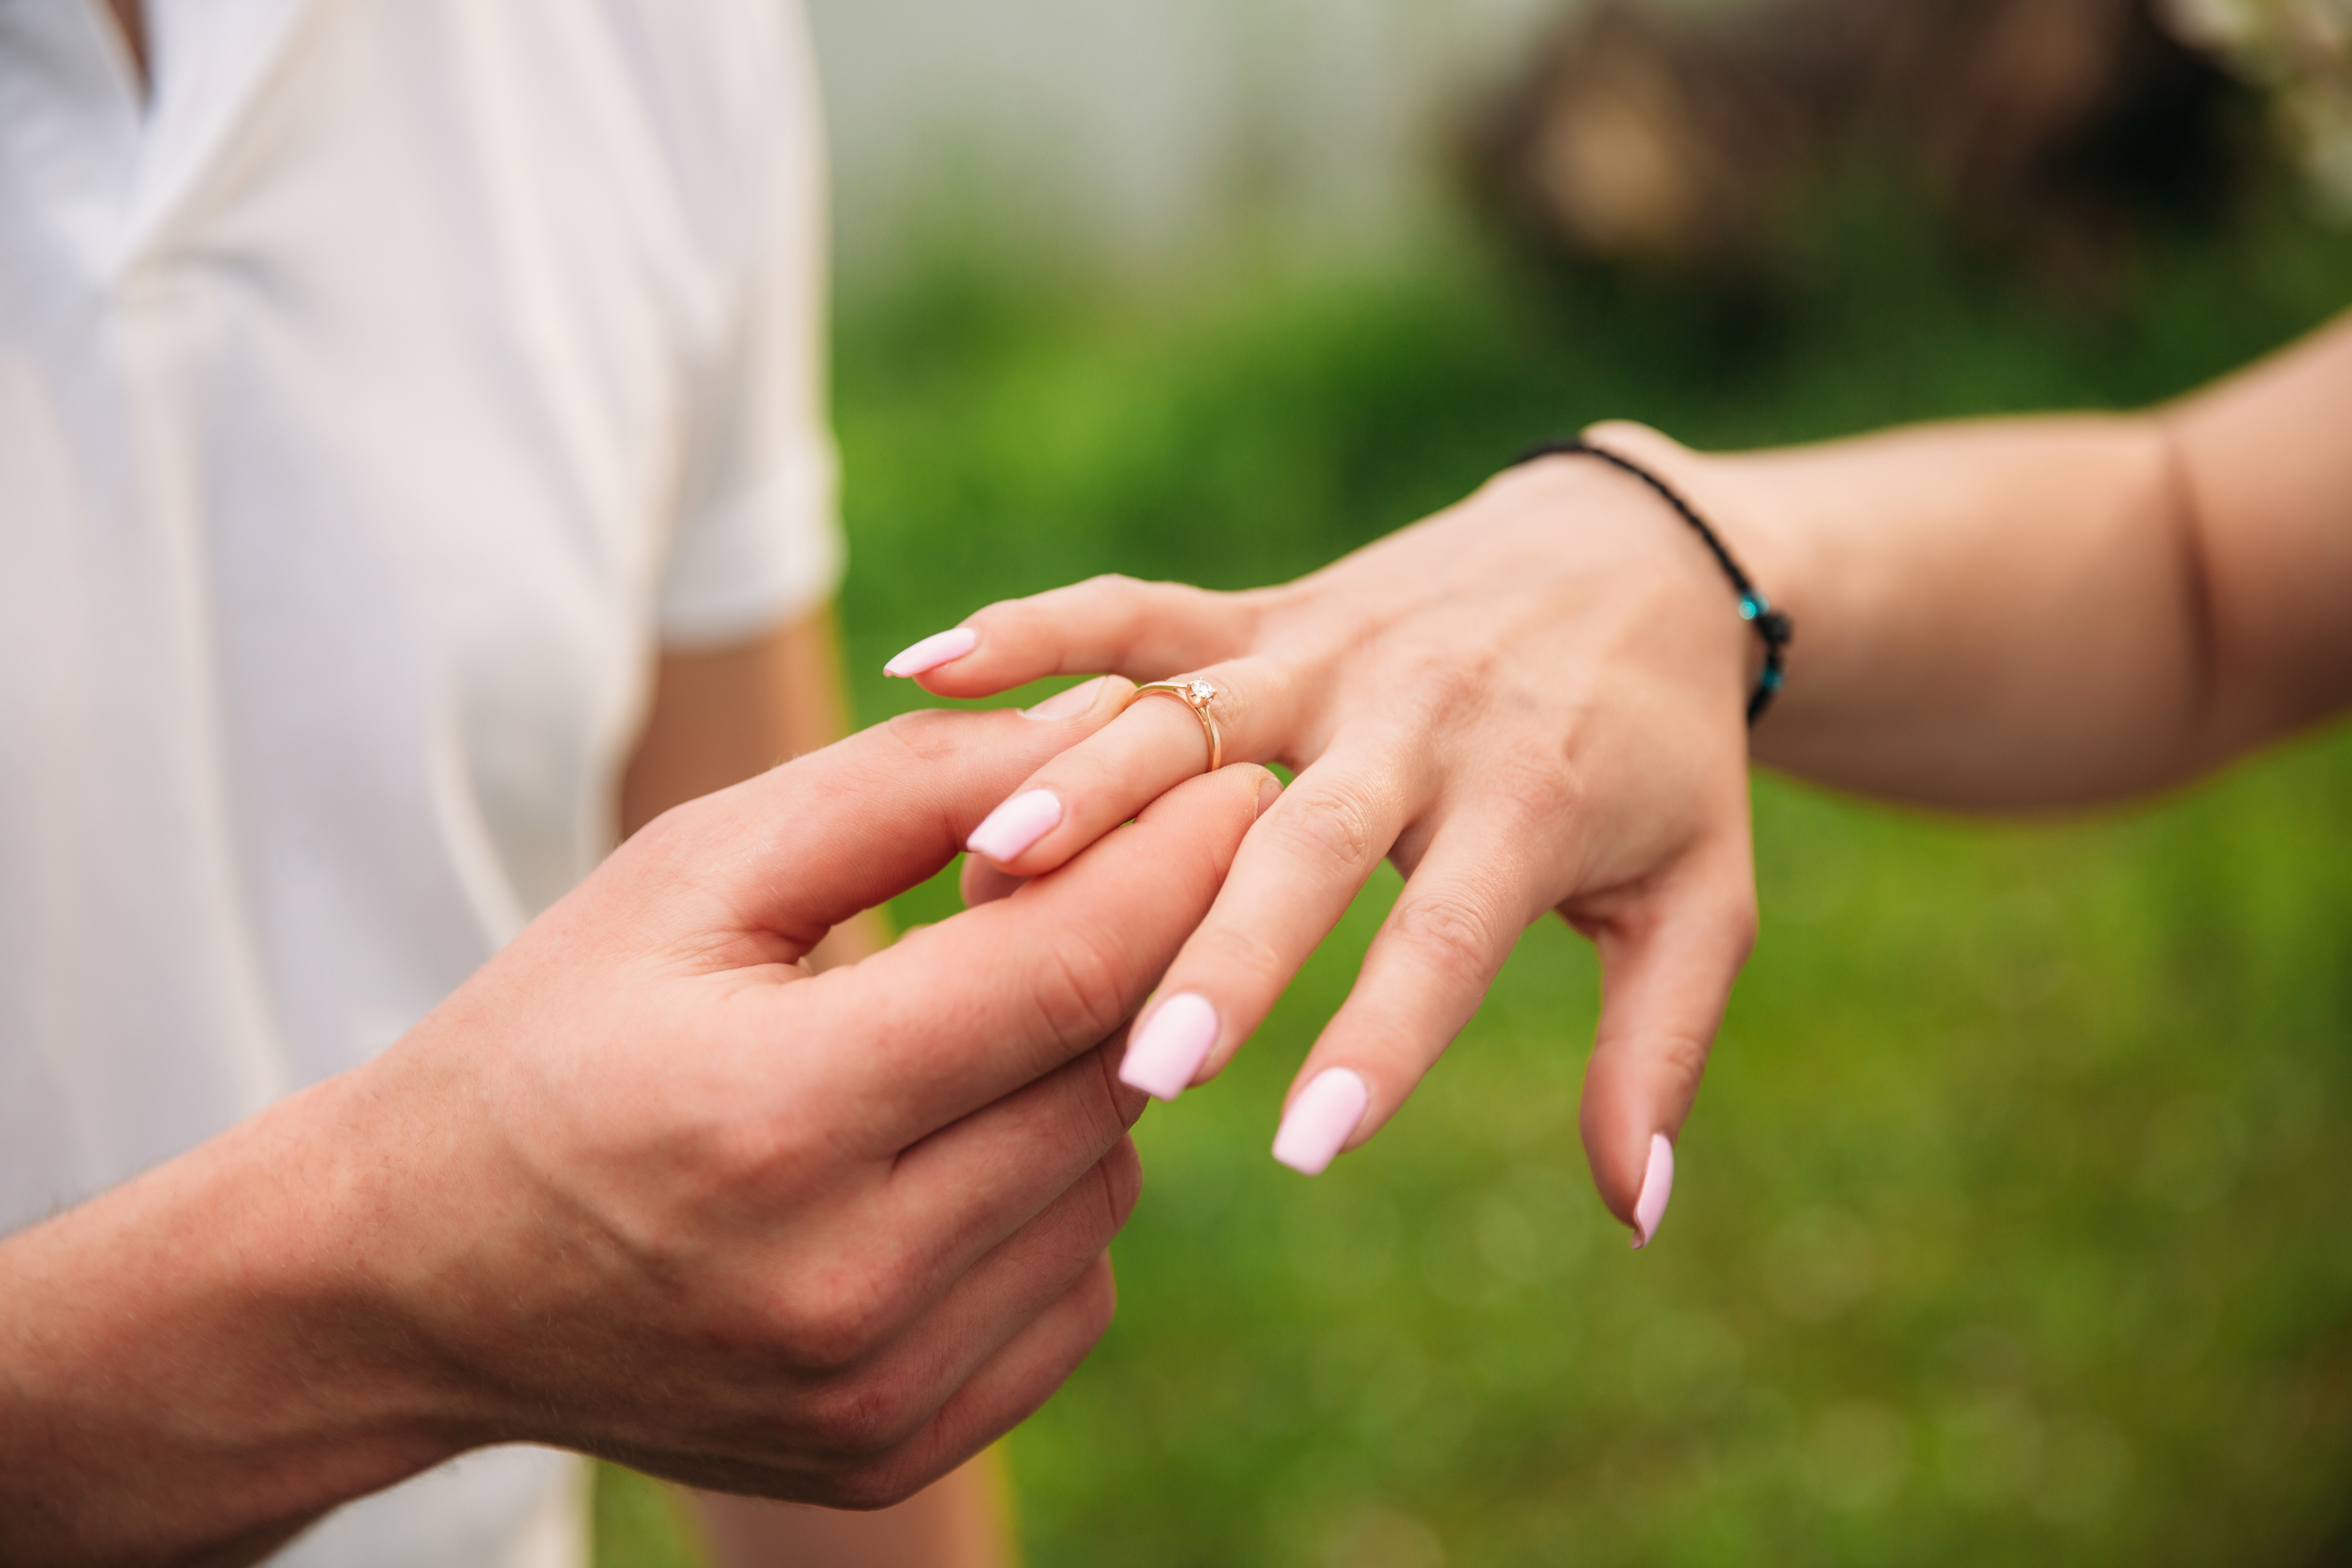 Un homme demande une femme en mariage | Source : Shutterstock